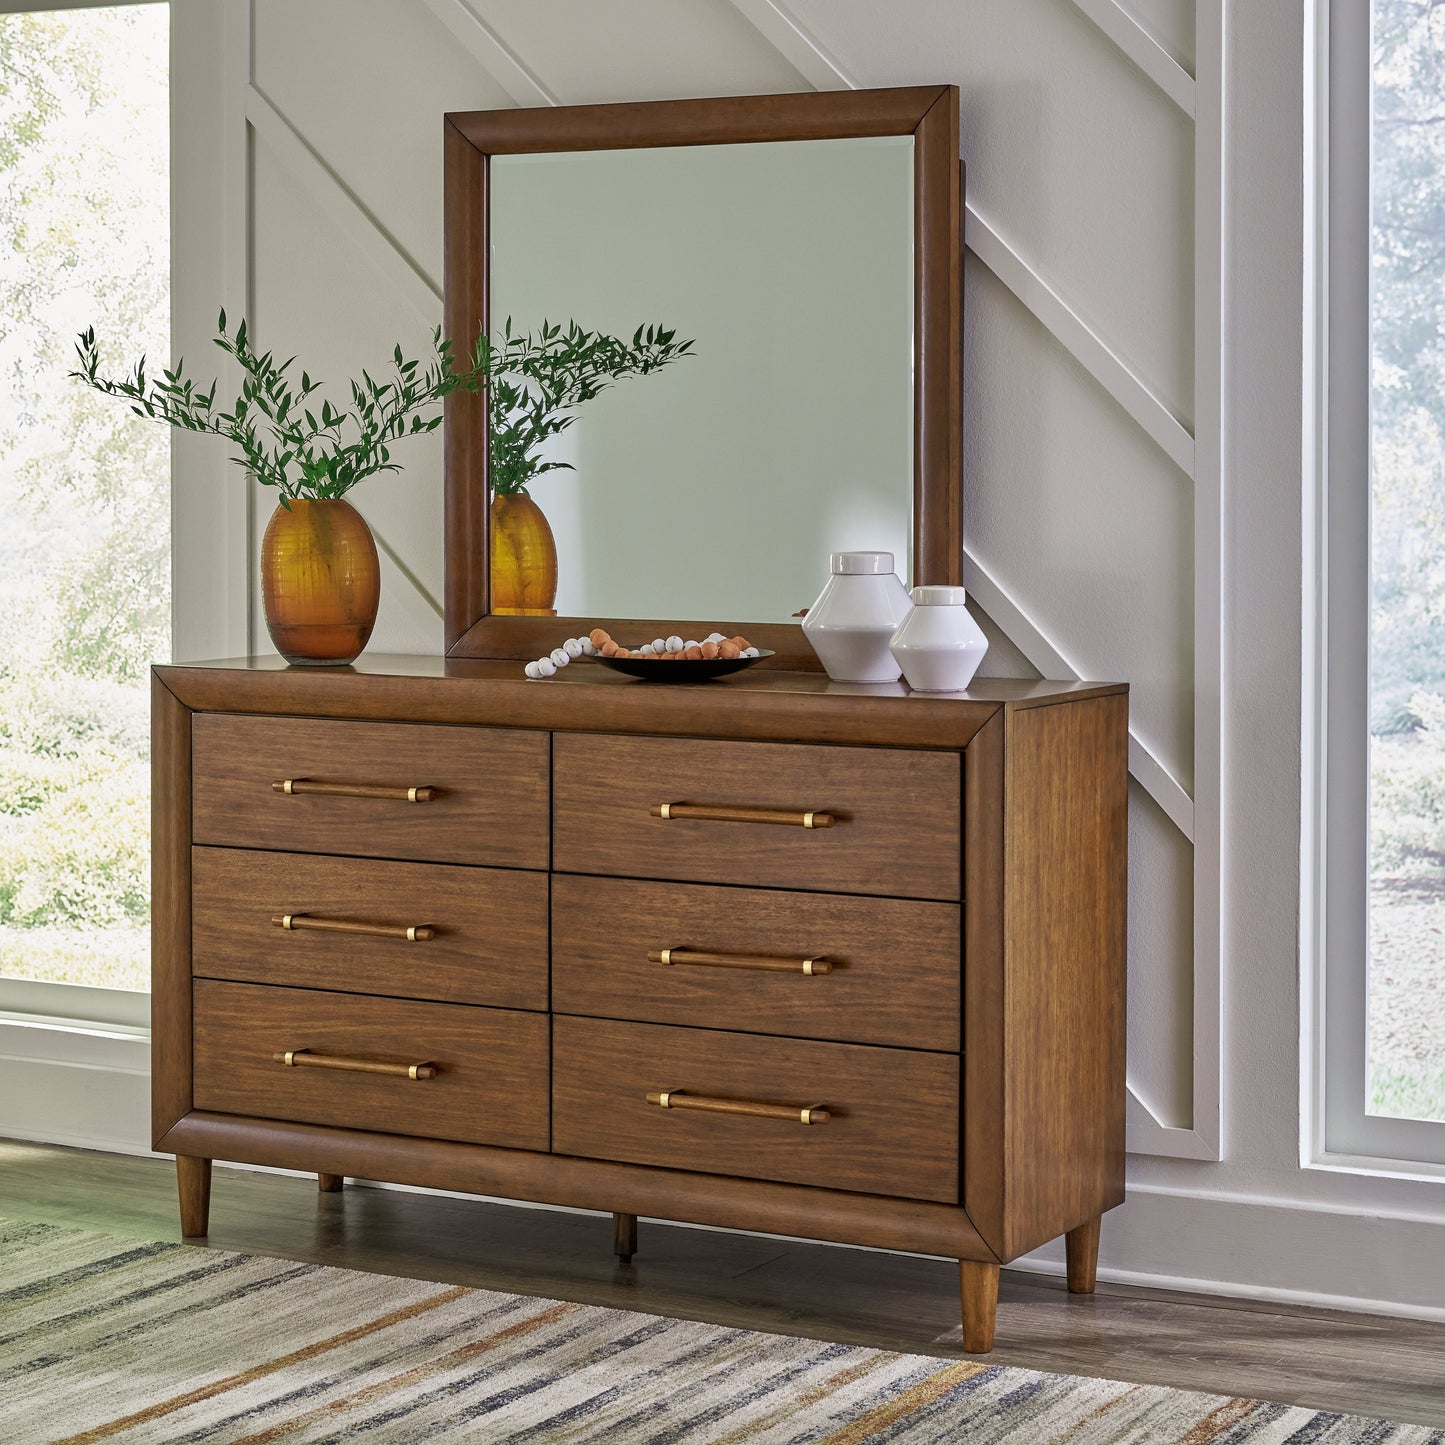 Lyncott King Upholstered Bedroom Set with Dresser and Mirror